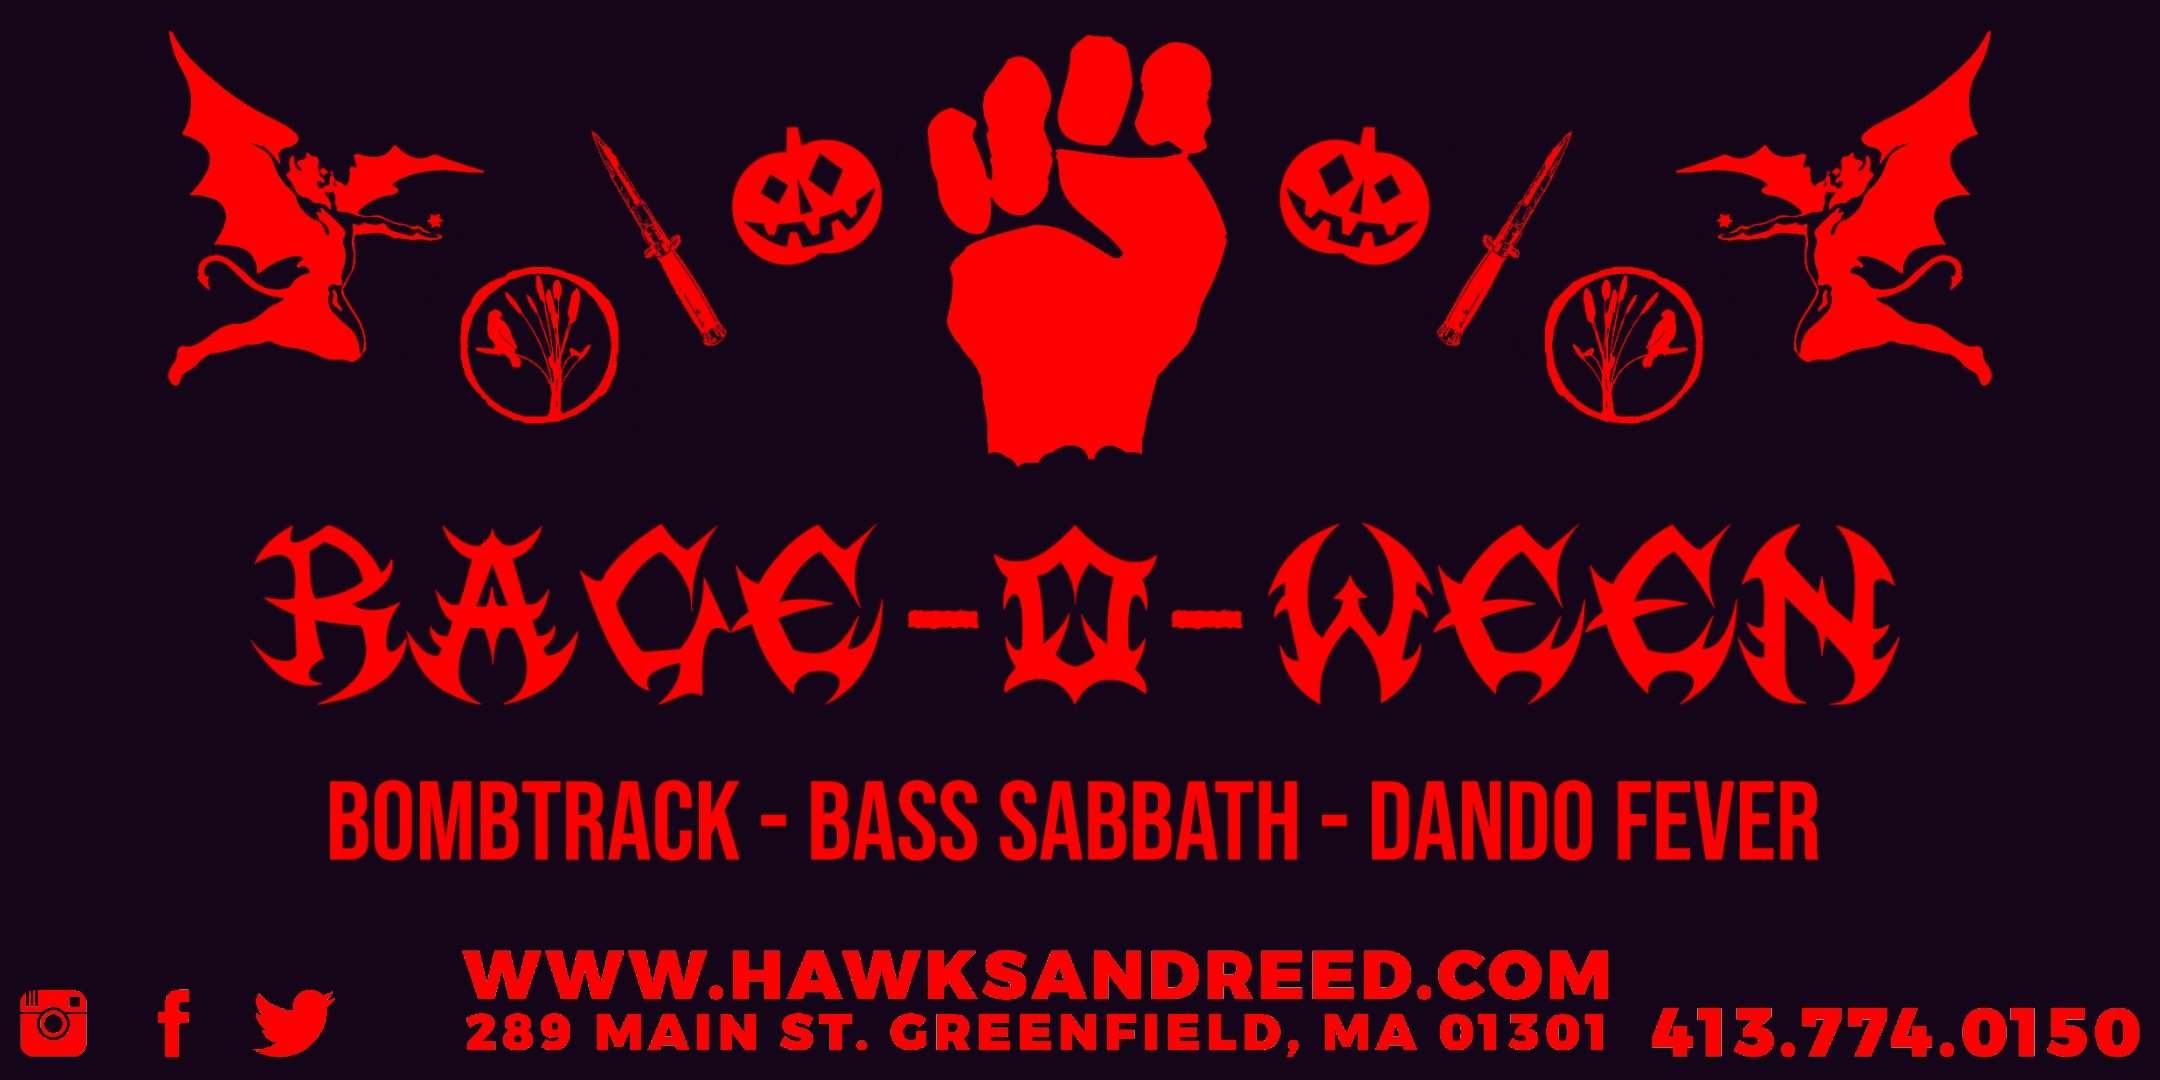 Rage-O-Ween ft. Bombtrack, Bass Sabbath, and Dando Fever